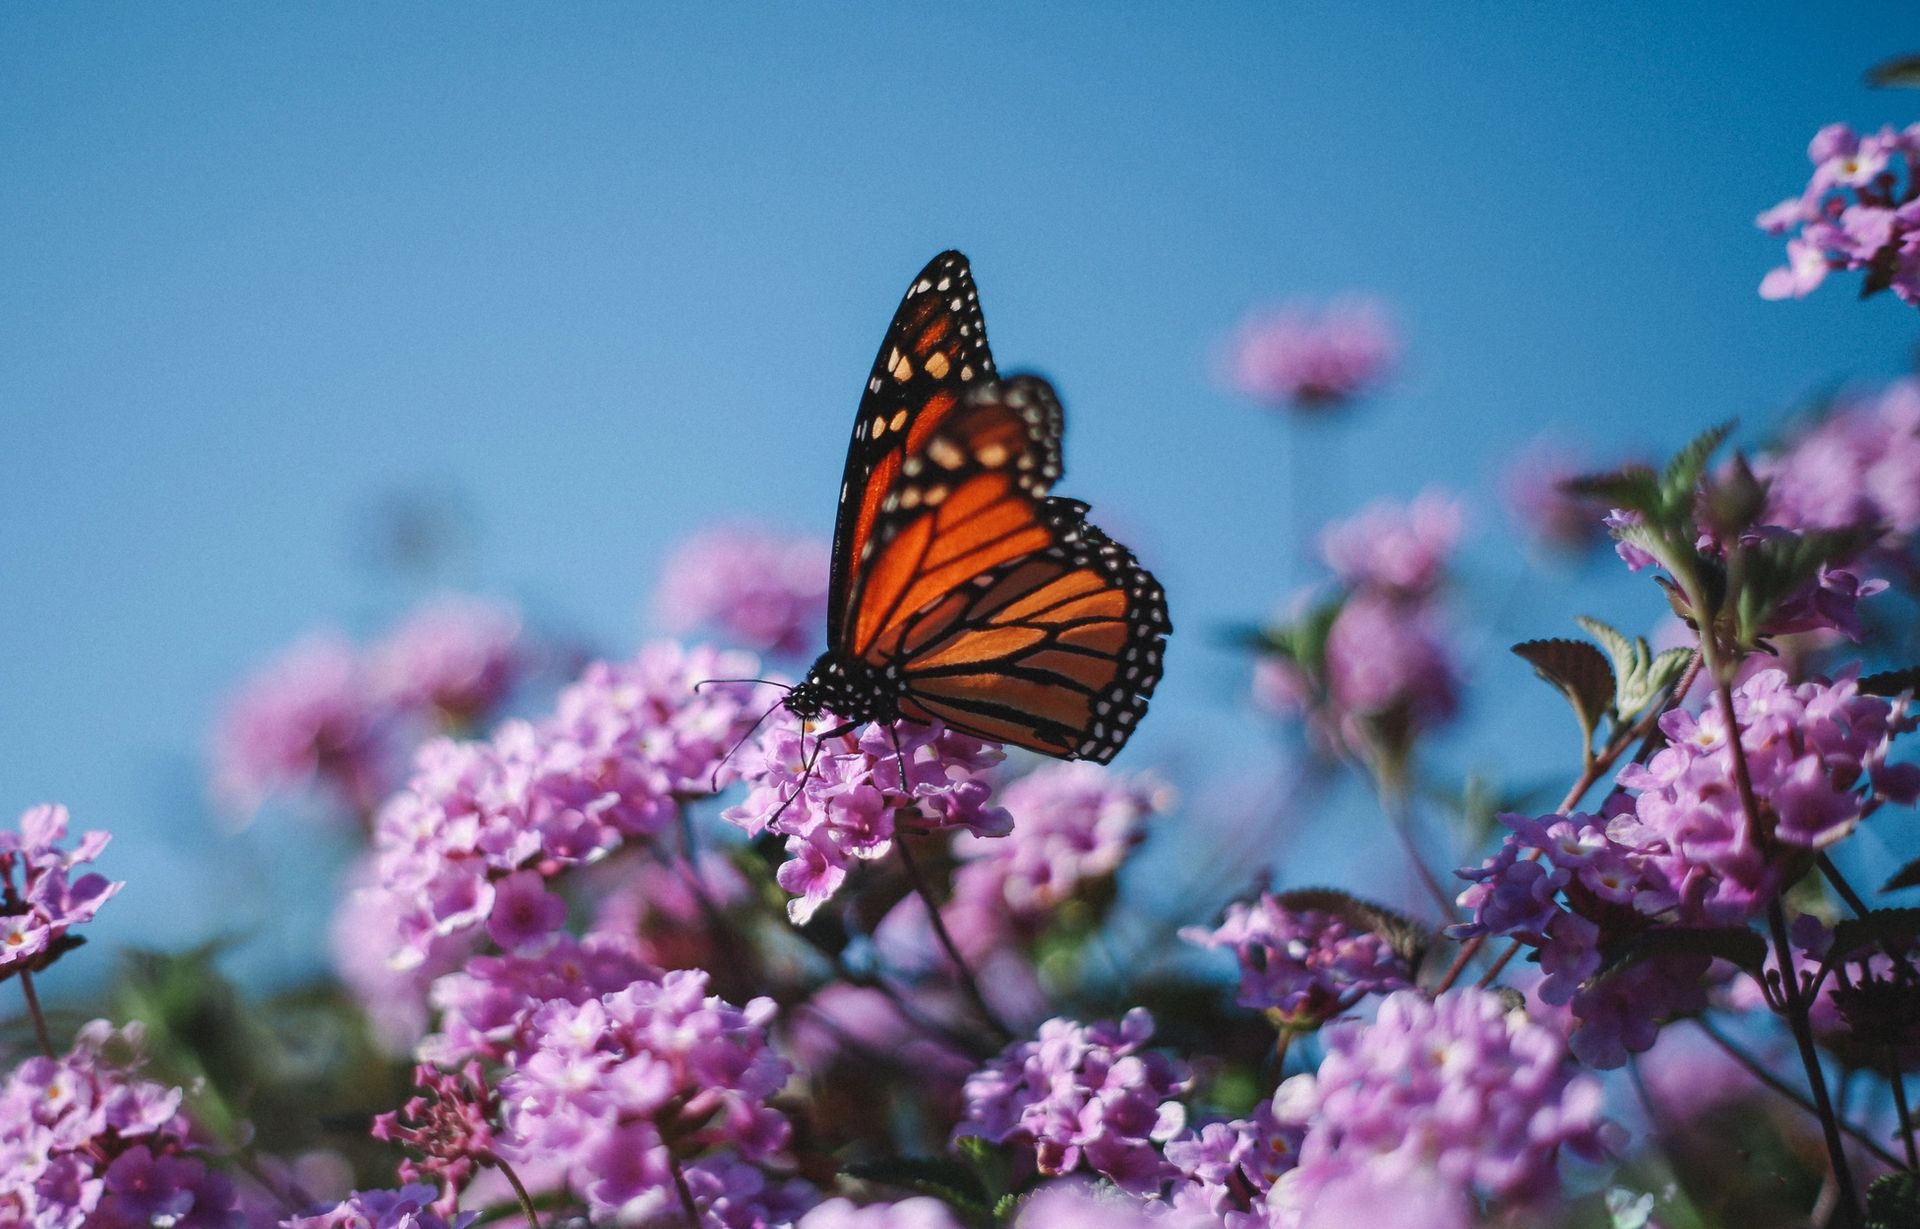 Butterfly on purple flower in front of blue skies